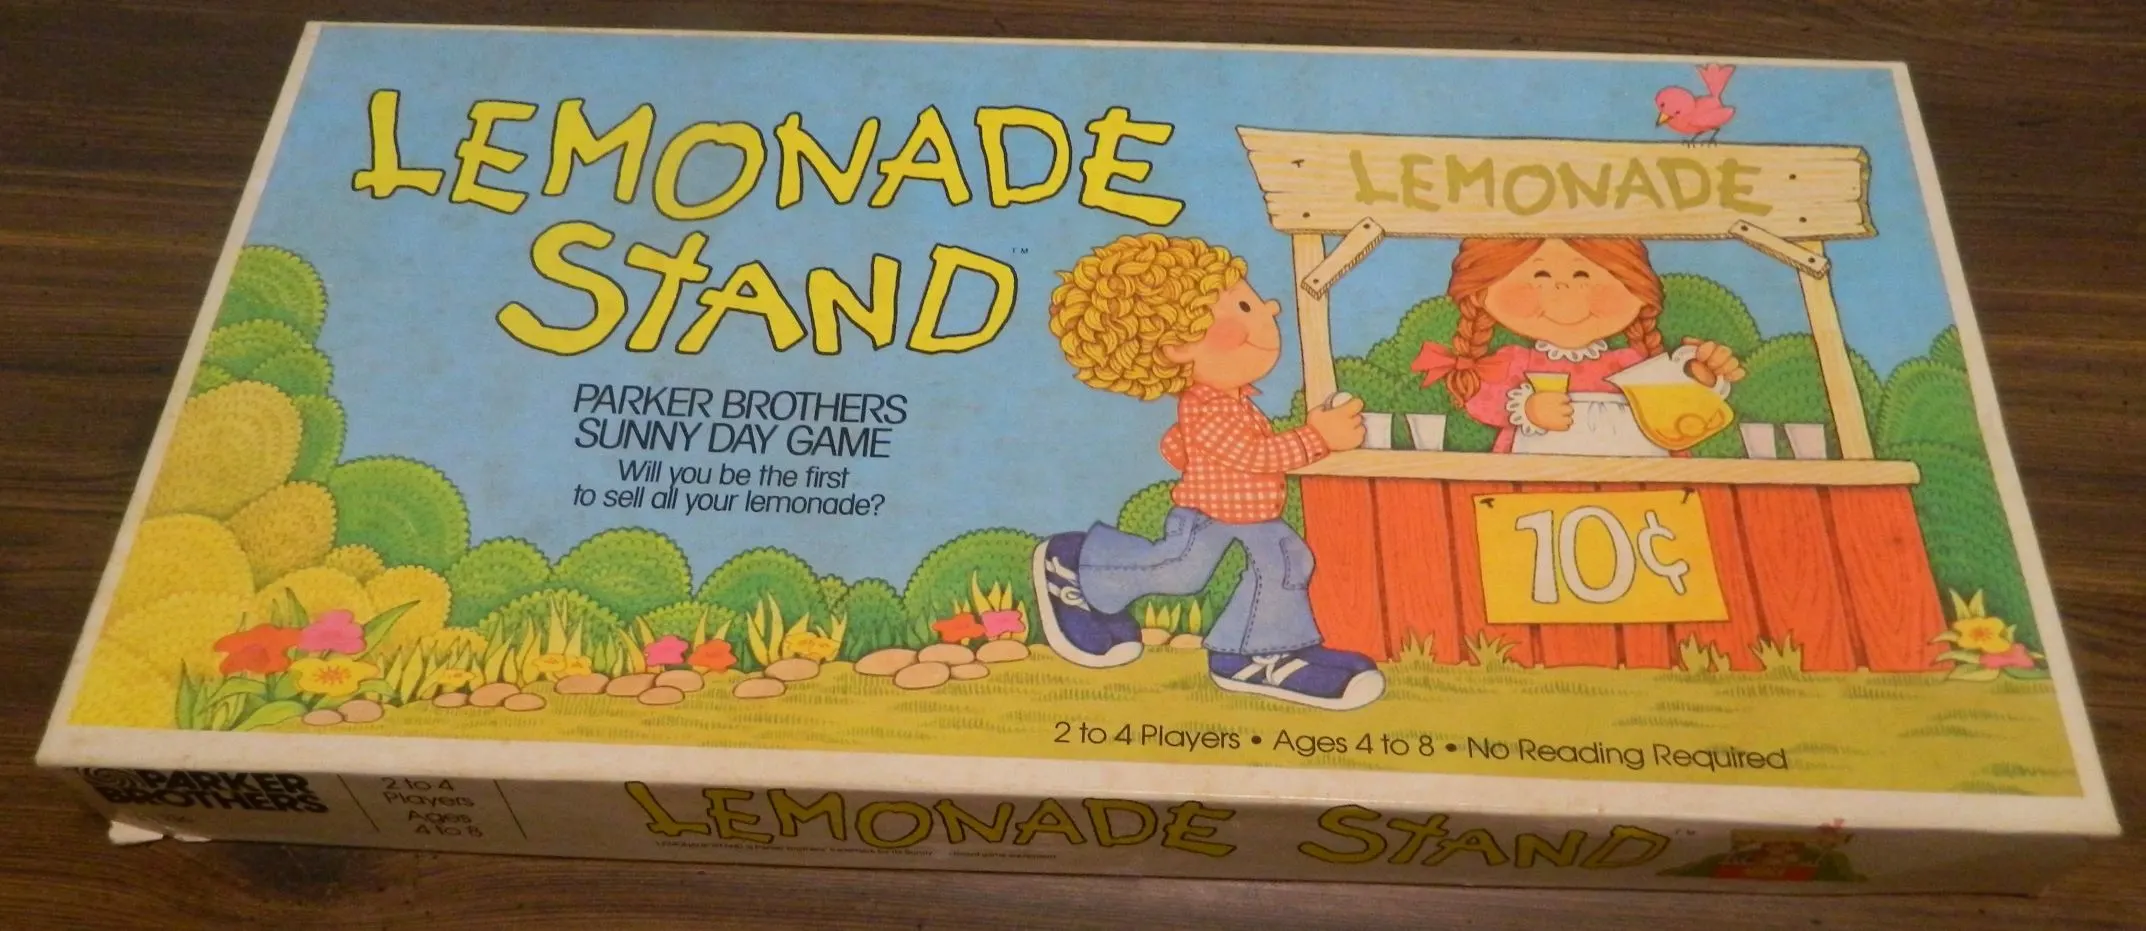 Box for Lemonade Stand